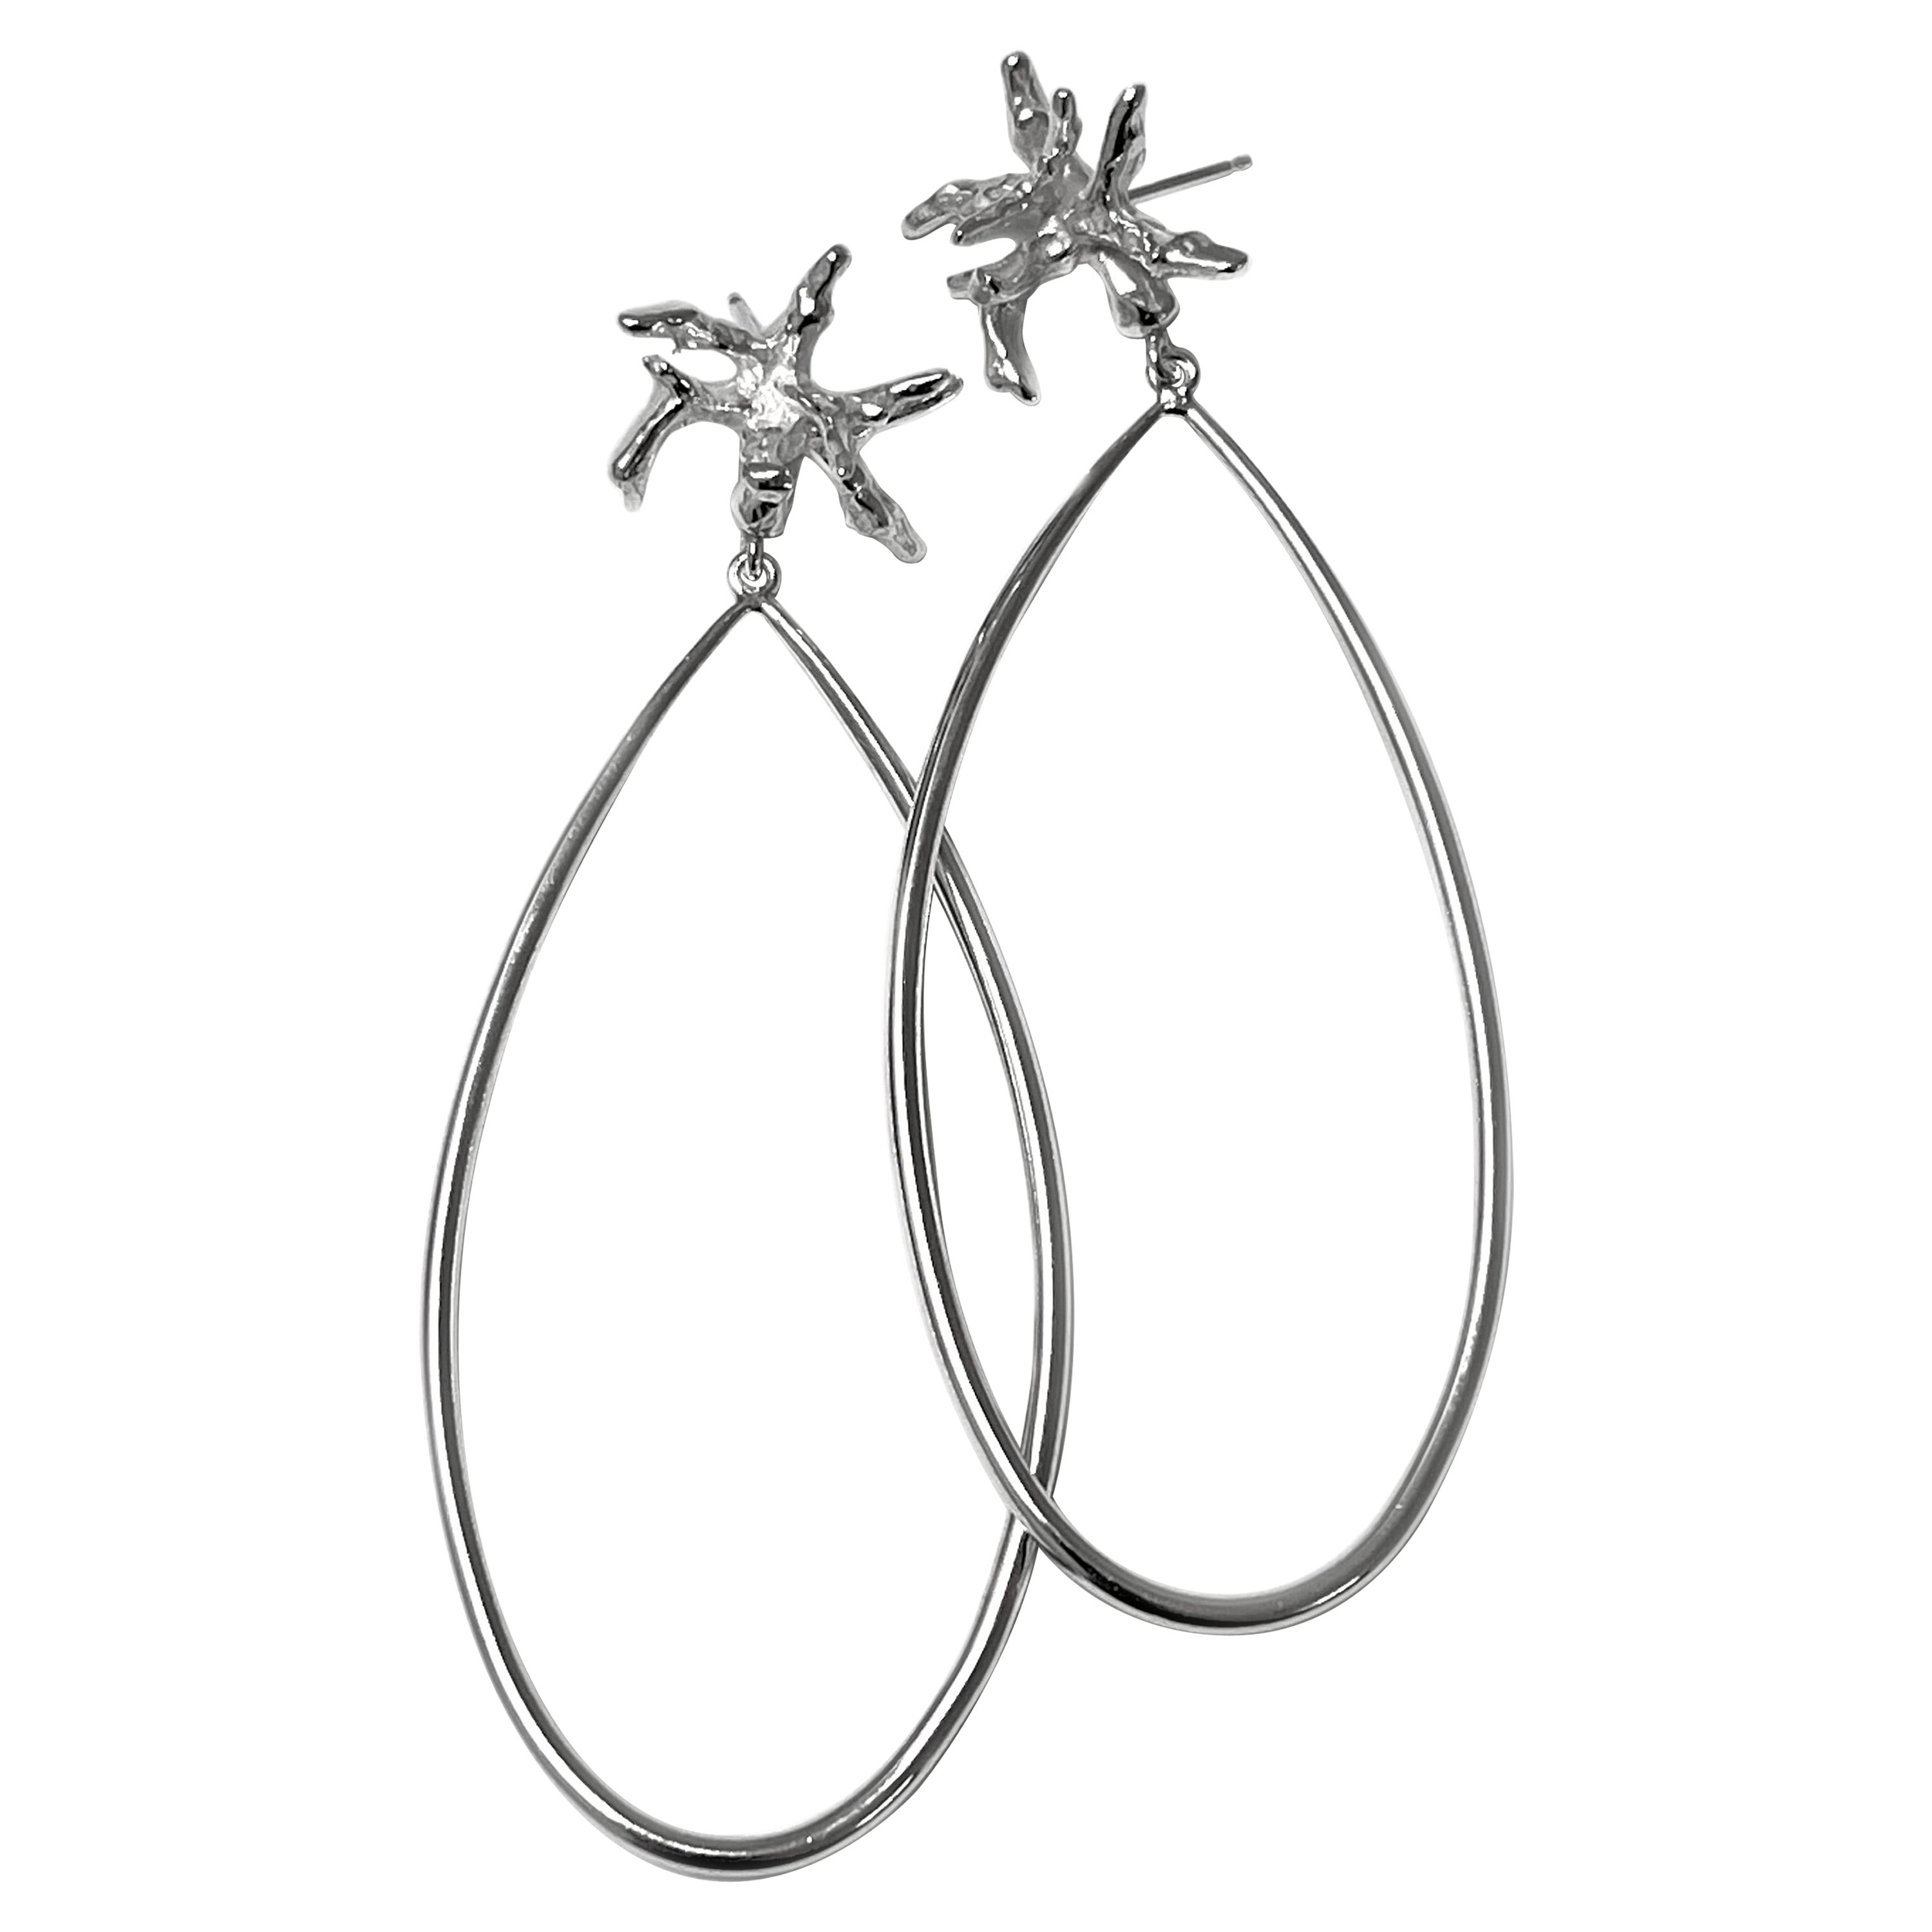 Seaview Earrings in Sterling Silver Dangle Teardrop with Coral Stud For Sale